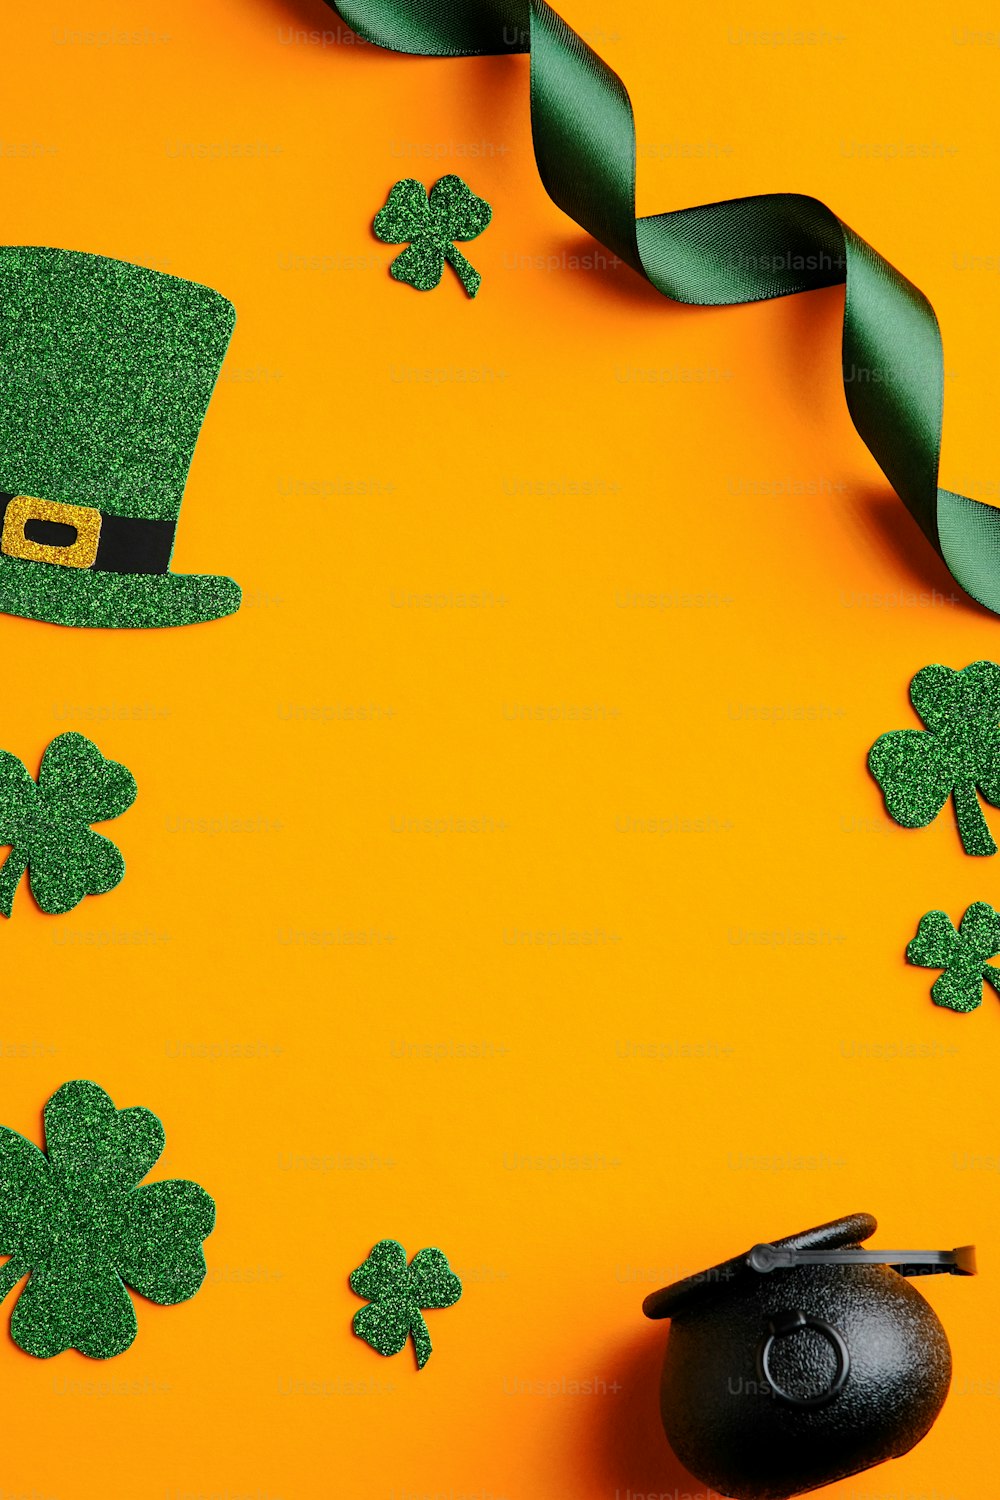 St Patricks day banner design. Top view pot of gold, shamrock leaves, leprechaun hat on orange background. Saint Patrick's day greeting card template.